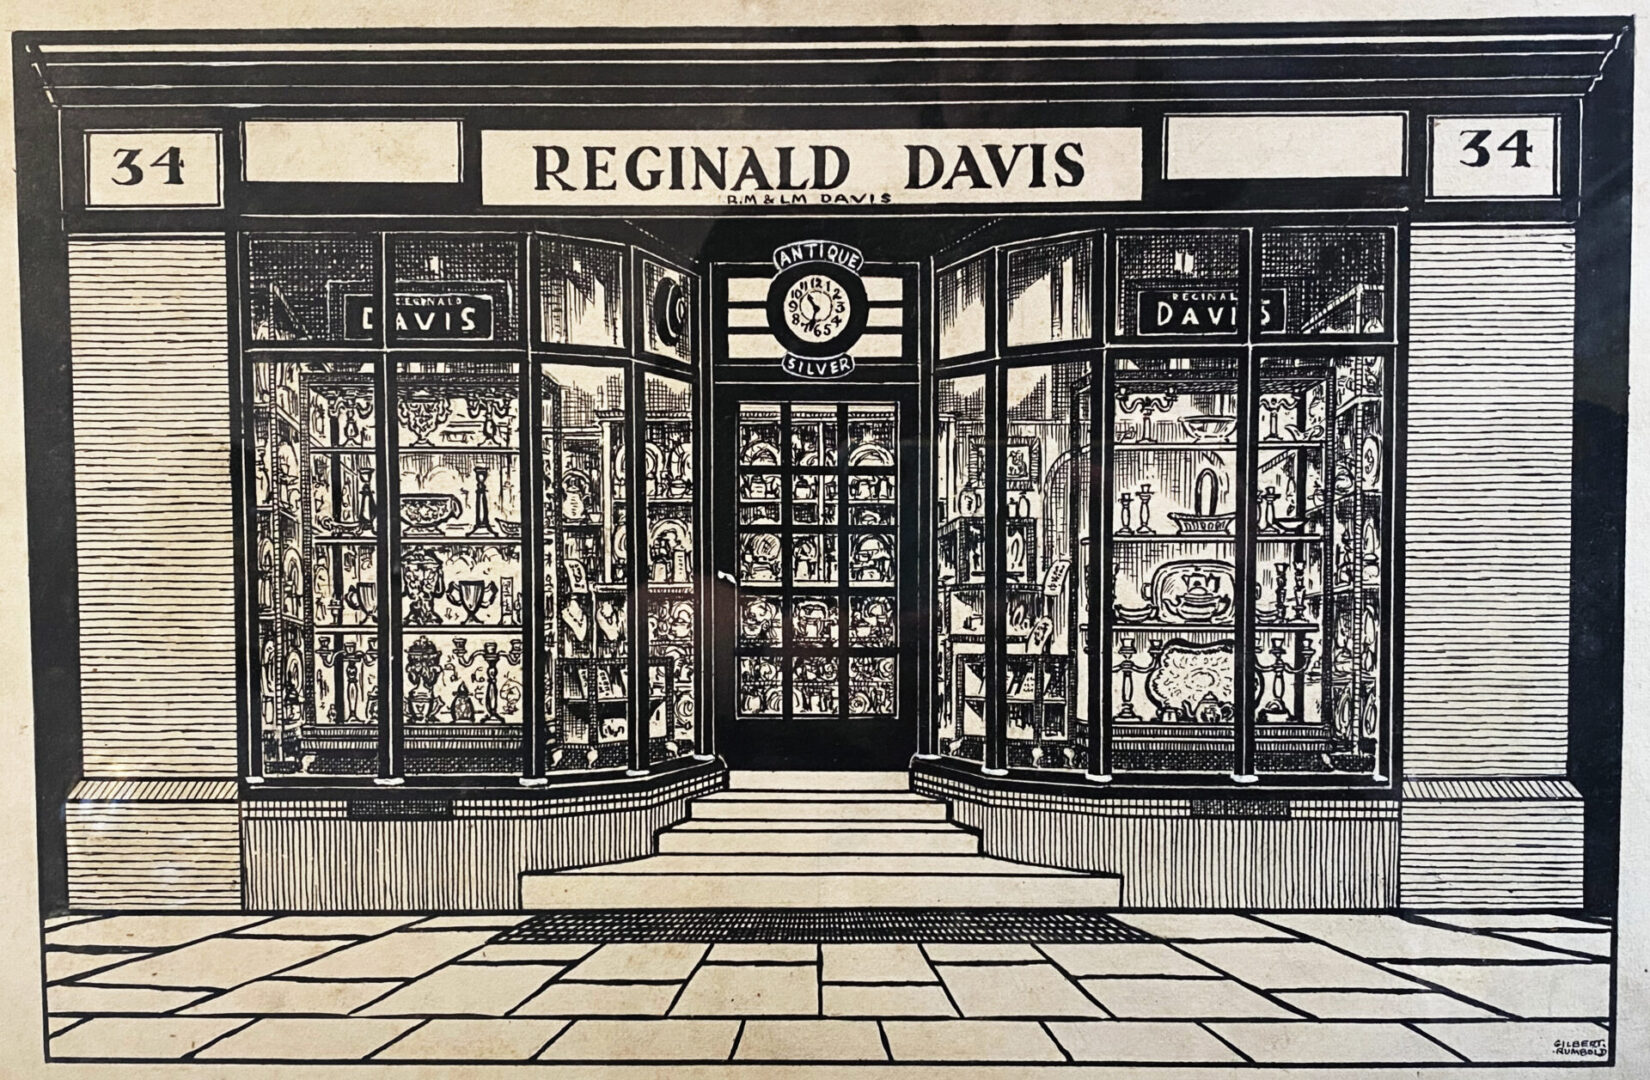 A drawing of reginald davis store front